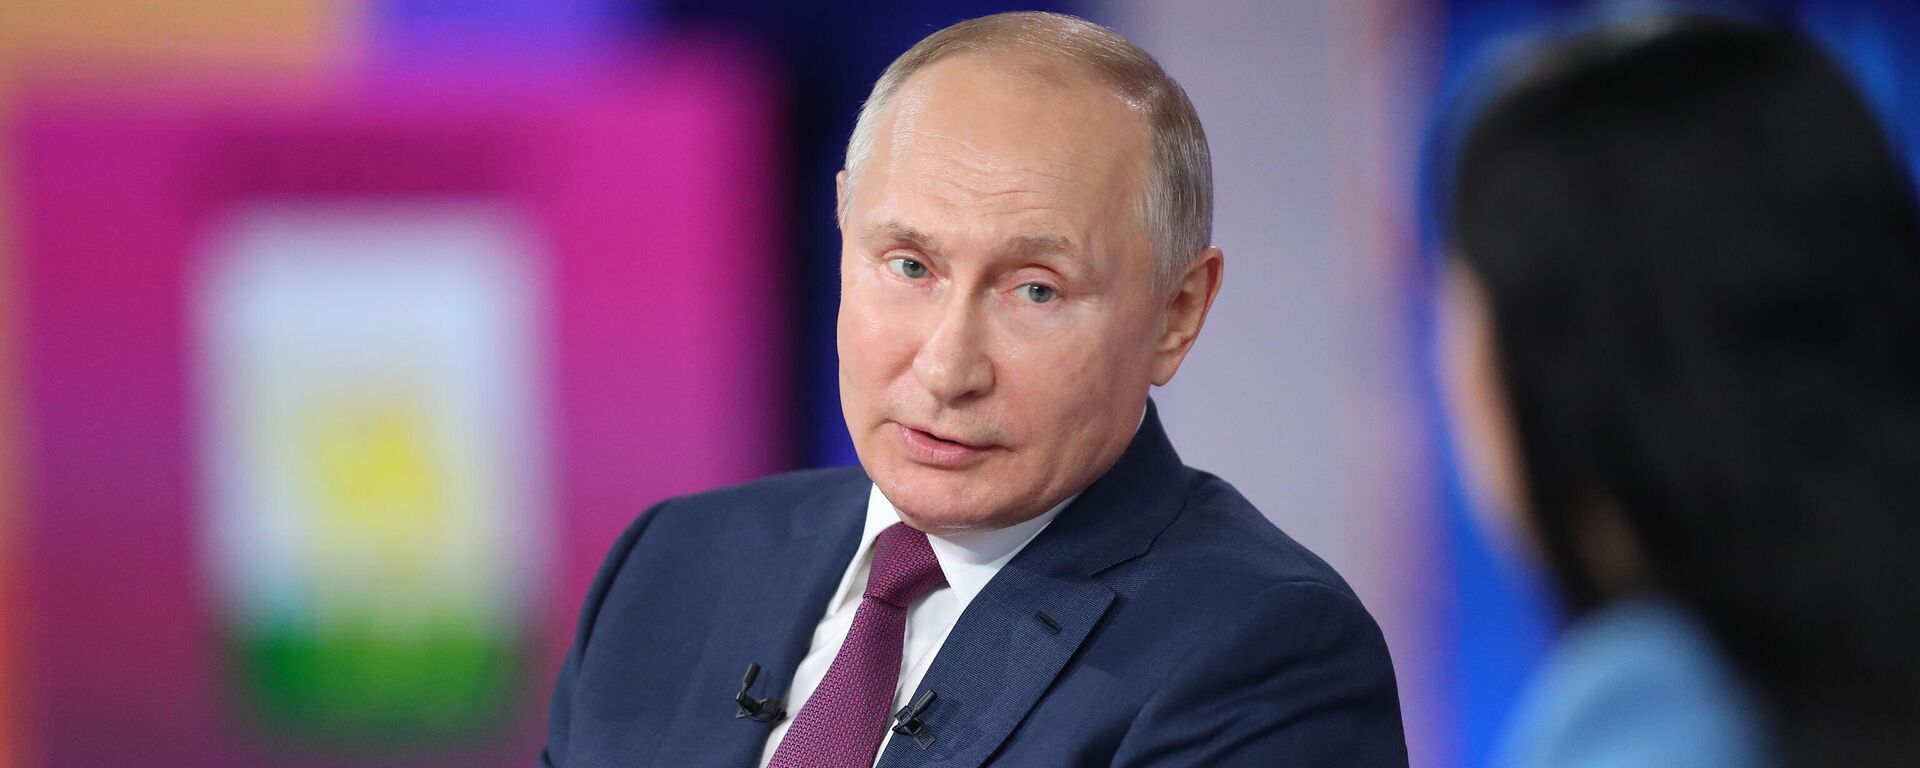 Vladímir Putin, presidente de Rusia - Sputnik Mundo, 1920, 01.09.2021